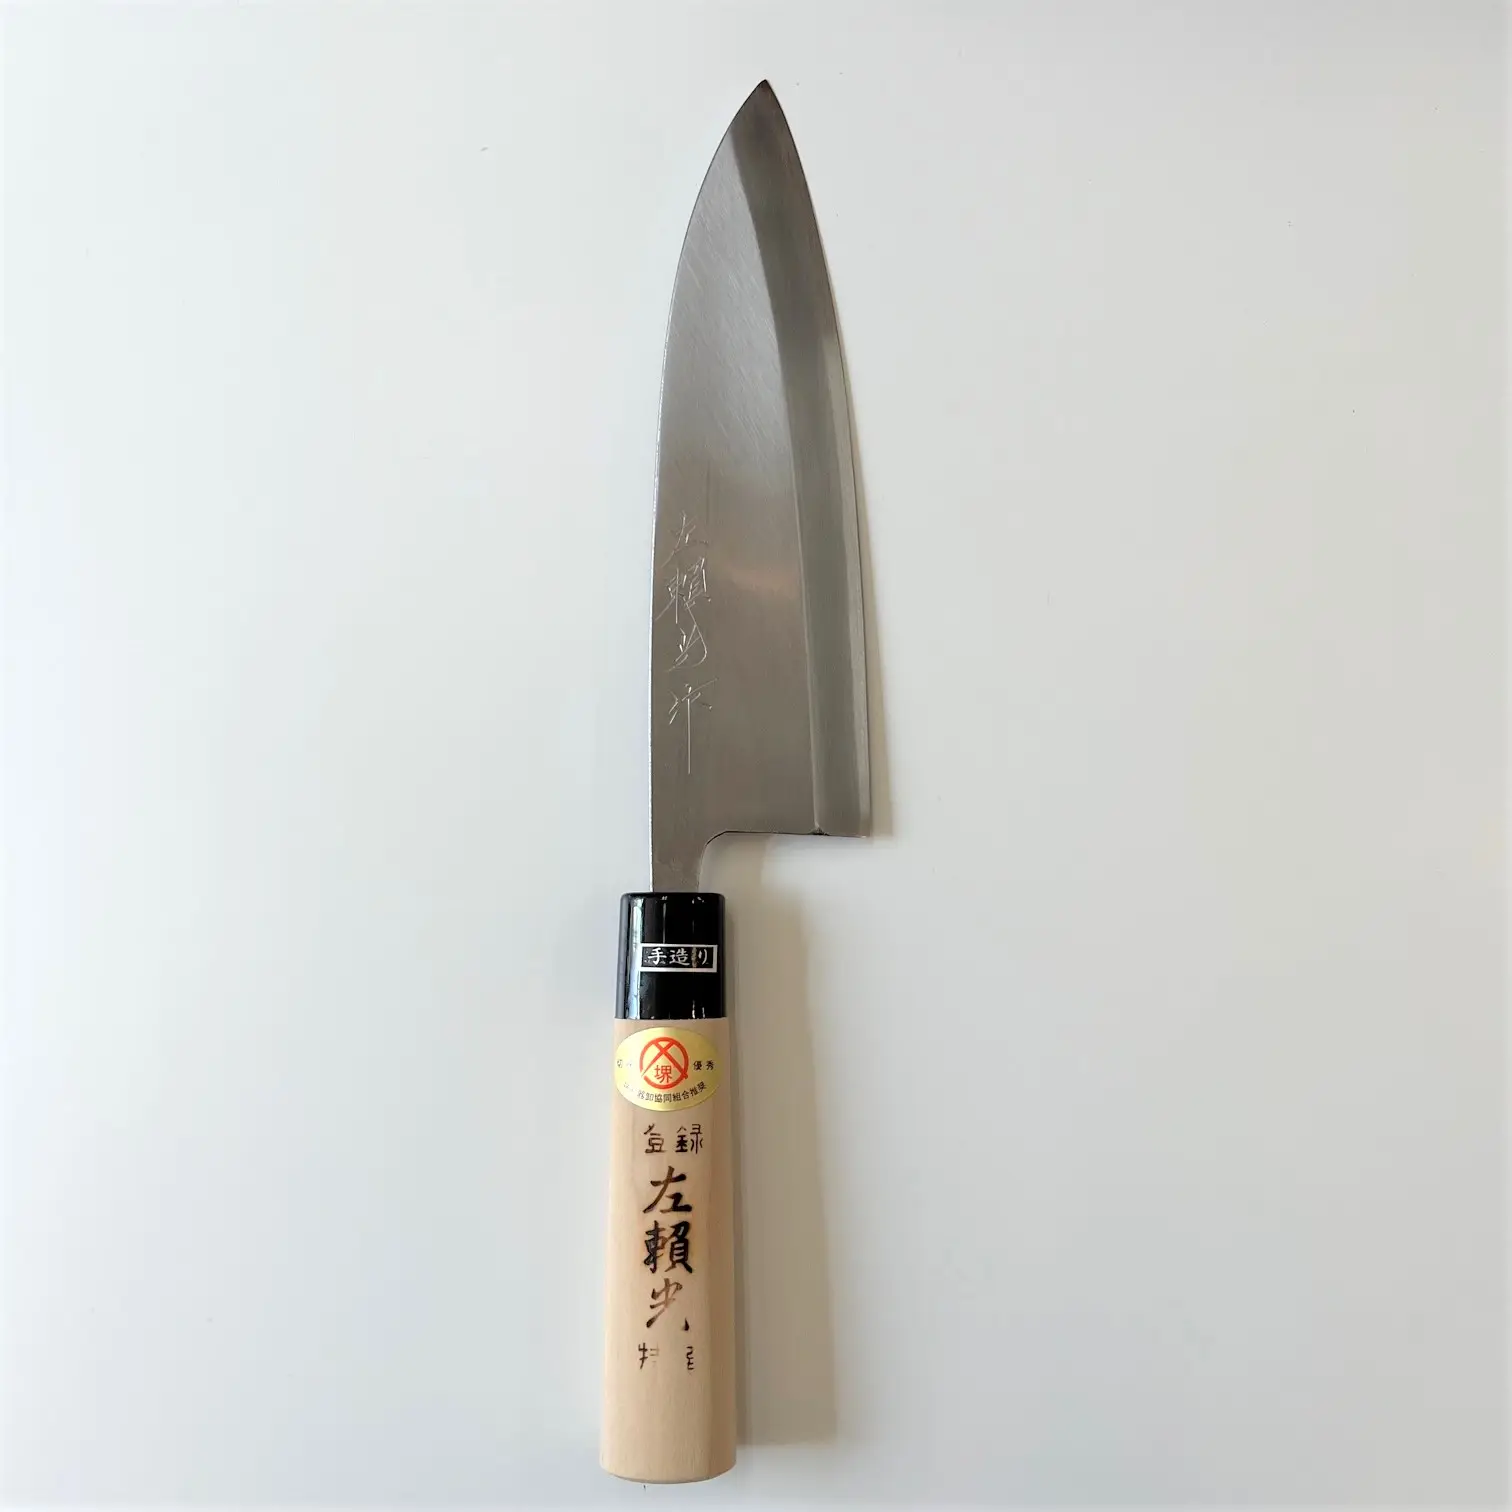 HIDARI YORIMITSU Shirogami no. 2 높은 탄소 고품질 Deba 칼 심각한 professinal 만든 사카이 일본 손으로 만든